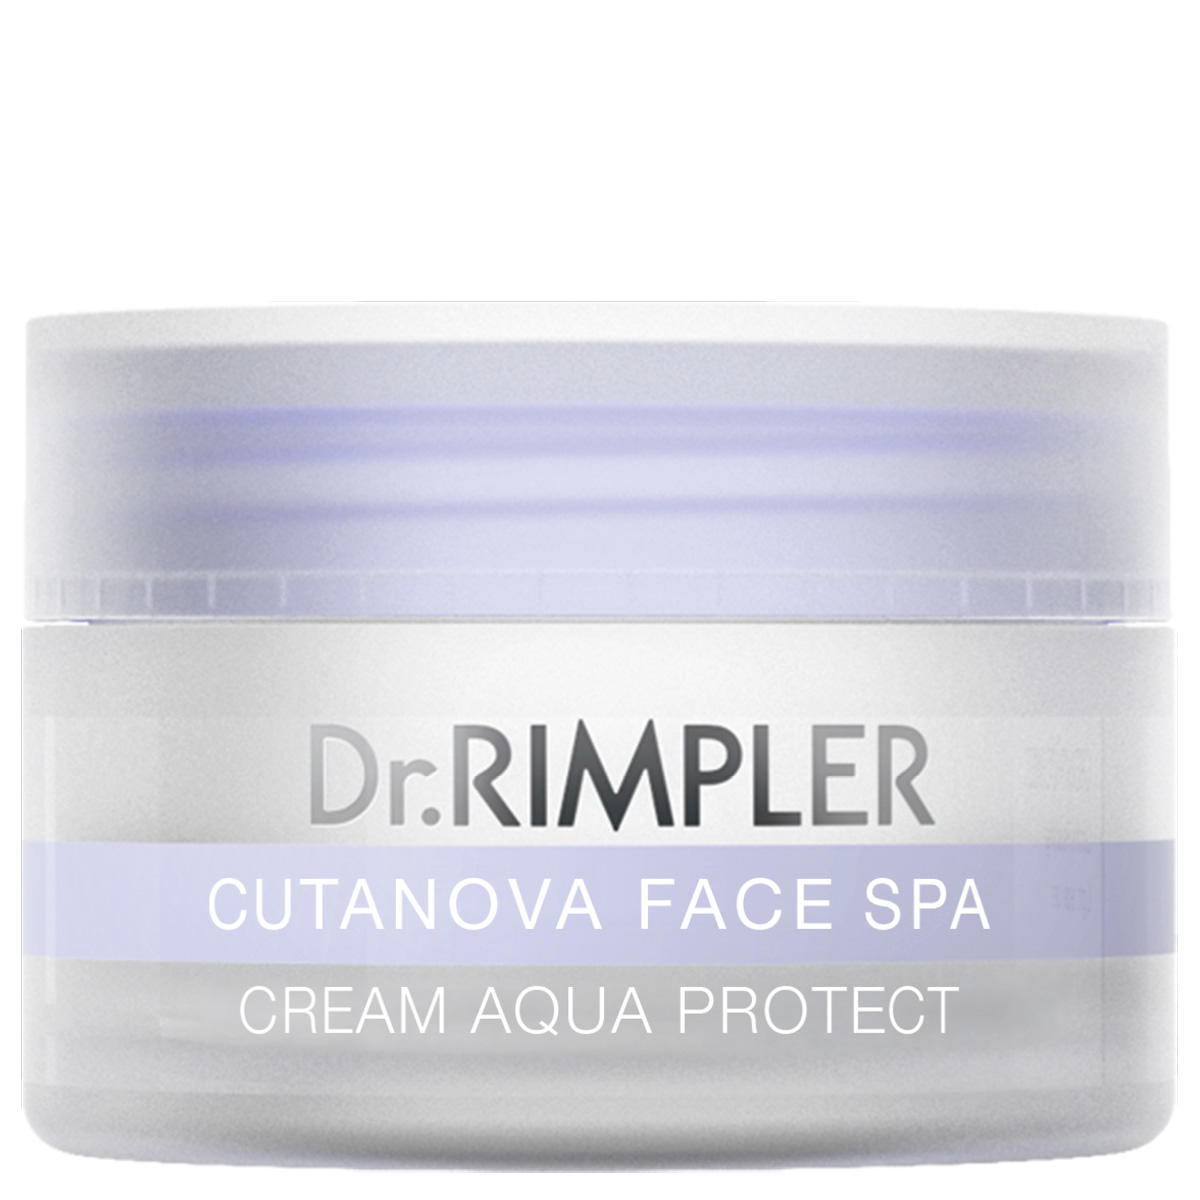 Dr. RIMPLER CUTANOVA FACE SPA Cream Aqua Protect 50 ml - 1